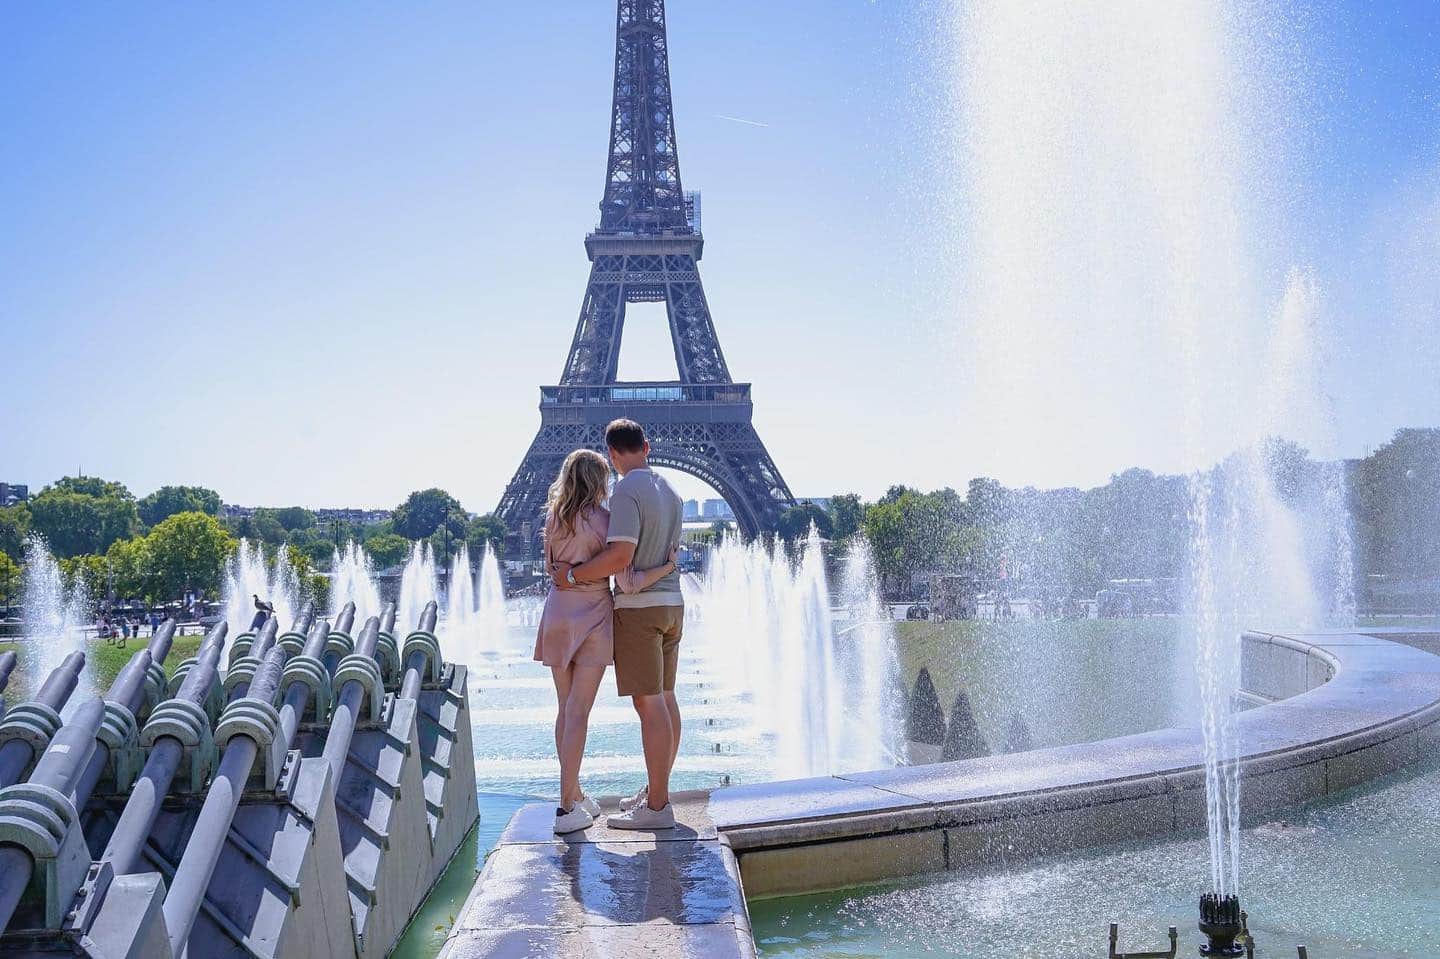 Let's celebrate your Love Story in Paris. 

.
.
.
.
Dm for booking 📩
www.chouettelove.com
event@chouettelove.com
 📞+33613905875 Liya
. ⁠
#ceremonize #engaged⁠ #truelove ⁠
#putaringonit⁠ #weddingquotes⁠
#weddingmemes #weddingtip #weddingtips⁠
#weddingplanning⁠
#weddingmemes #weddingparis⁠
#elopementinspiration⁠
#pariselopementwedding⁠ #pariselopement⁠
#marrymeinparis⁠ #weddingplannerparis⁠
#destinationweddingparis⁠ #elopeinparis⁠
#parisweddingphoto⁠ #elopementplanner⁠
#weddingplanner #weddingplannerparis⁠
#elopementinspo⁠ #elopementinparis